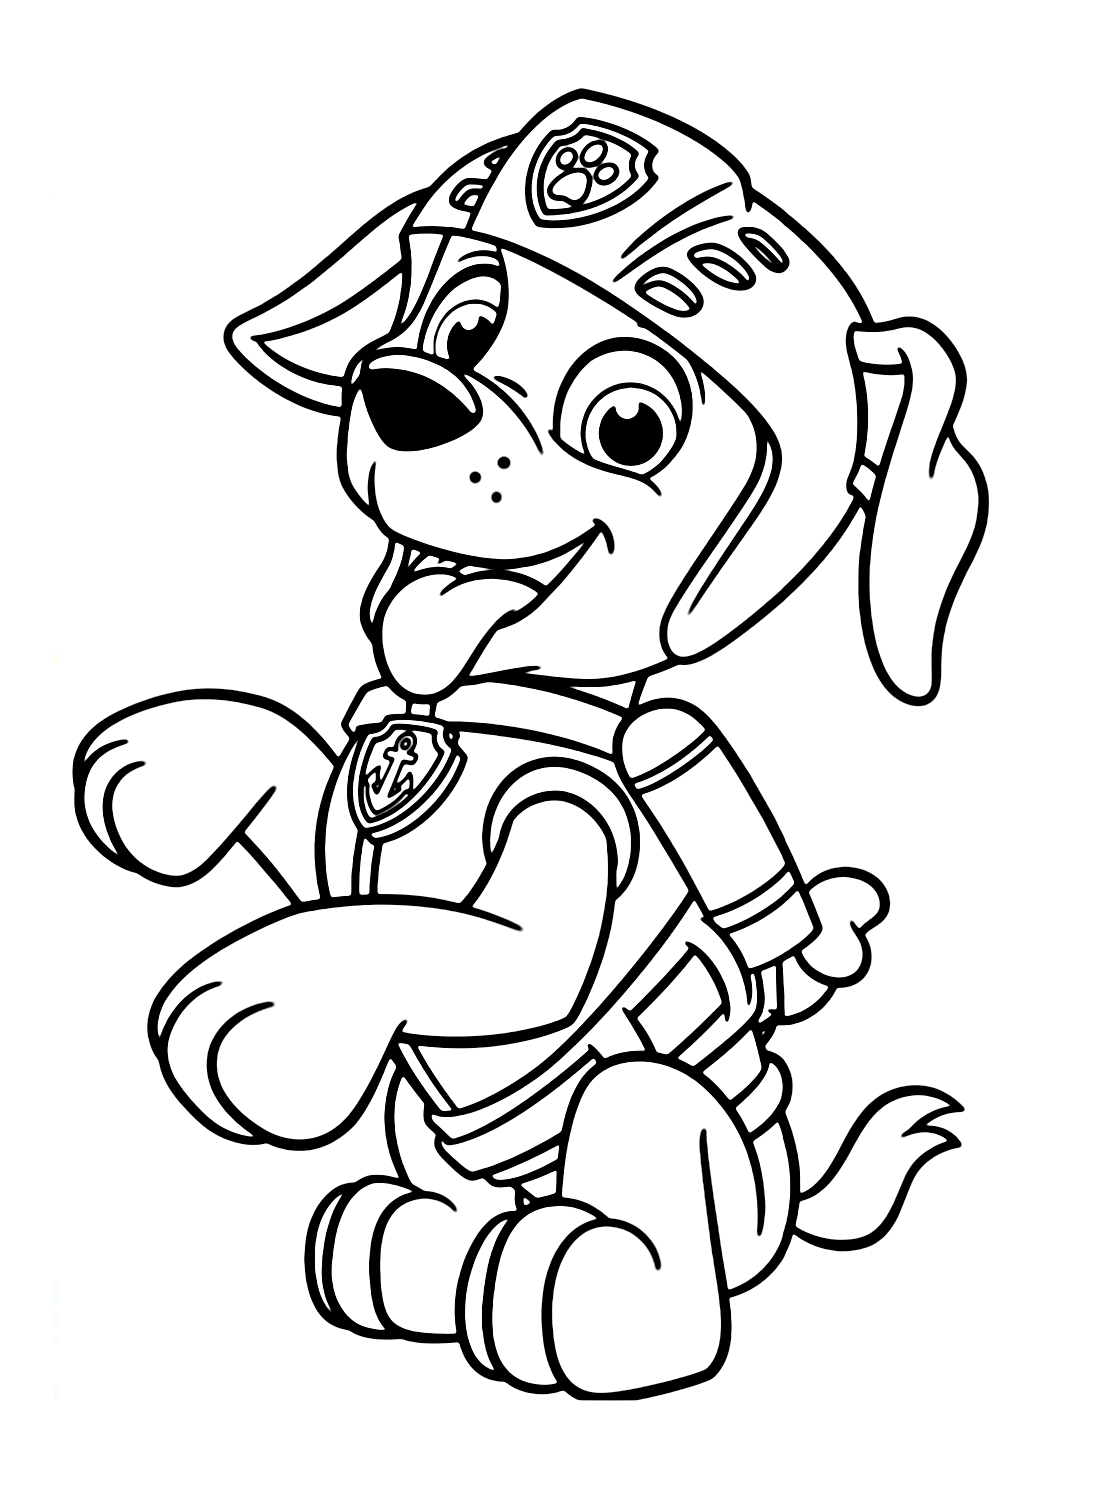 paw patrol zuma coloring page